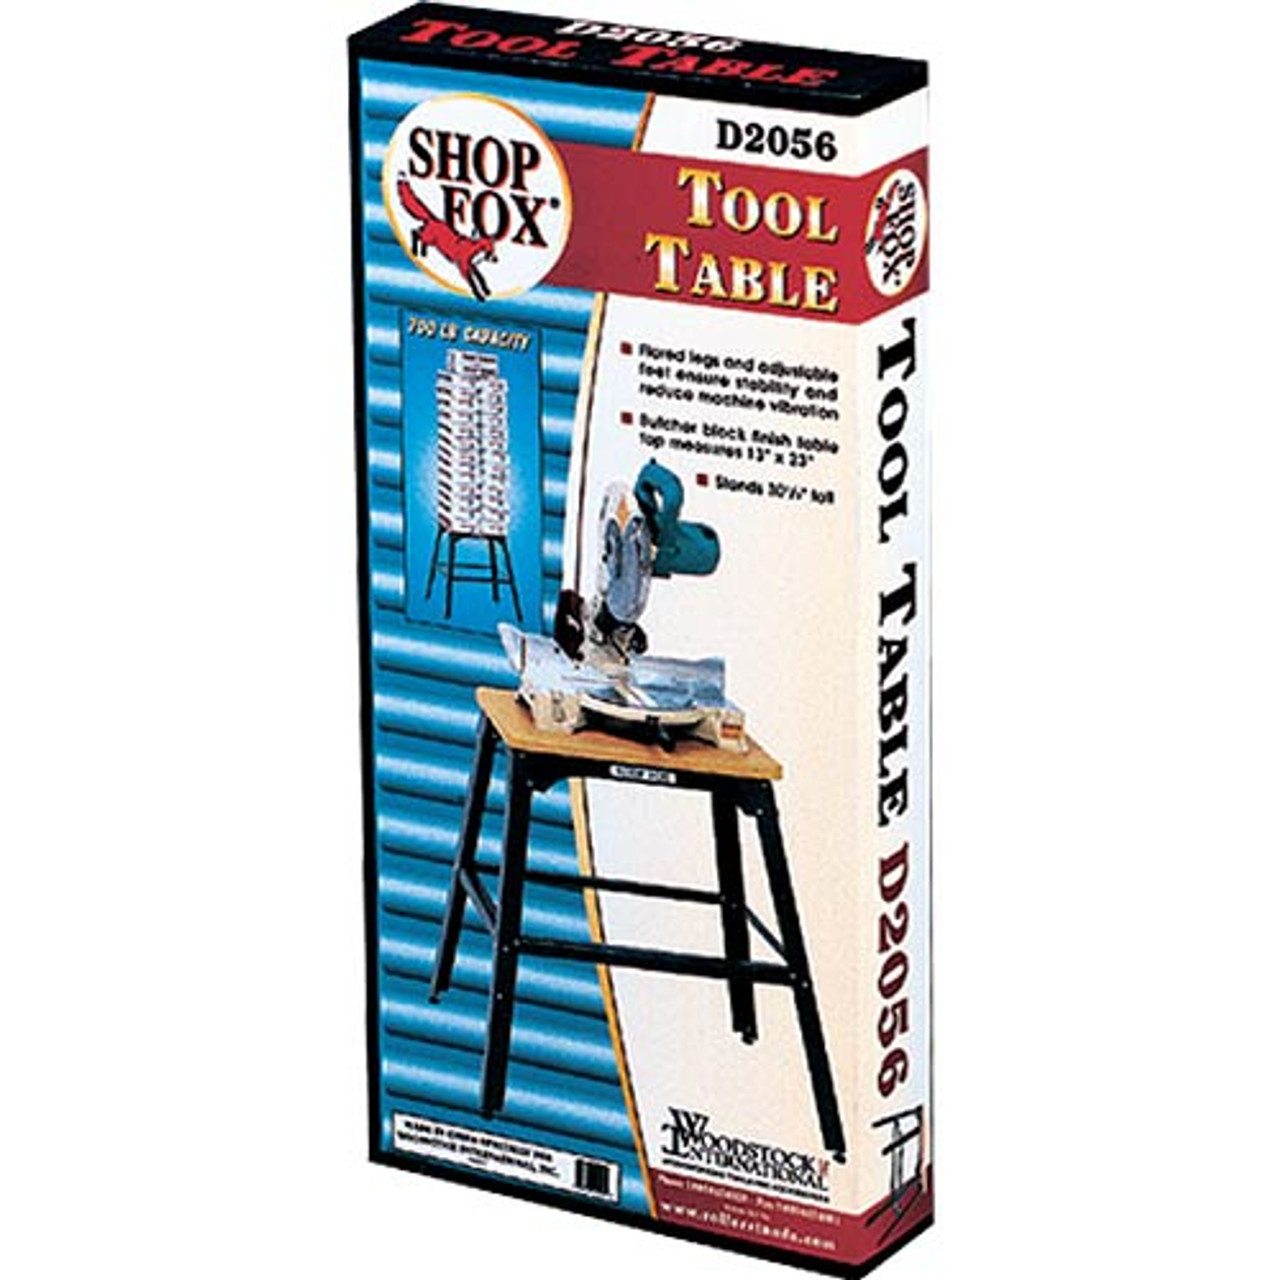 Woodstock Shop Fox Tool Table D2056